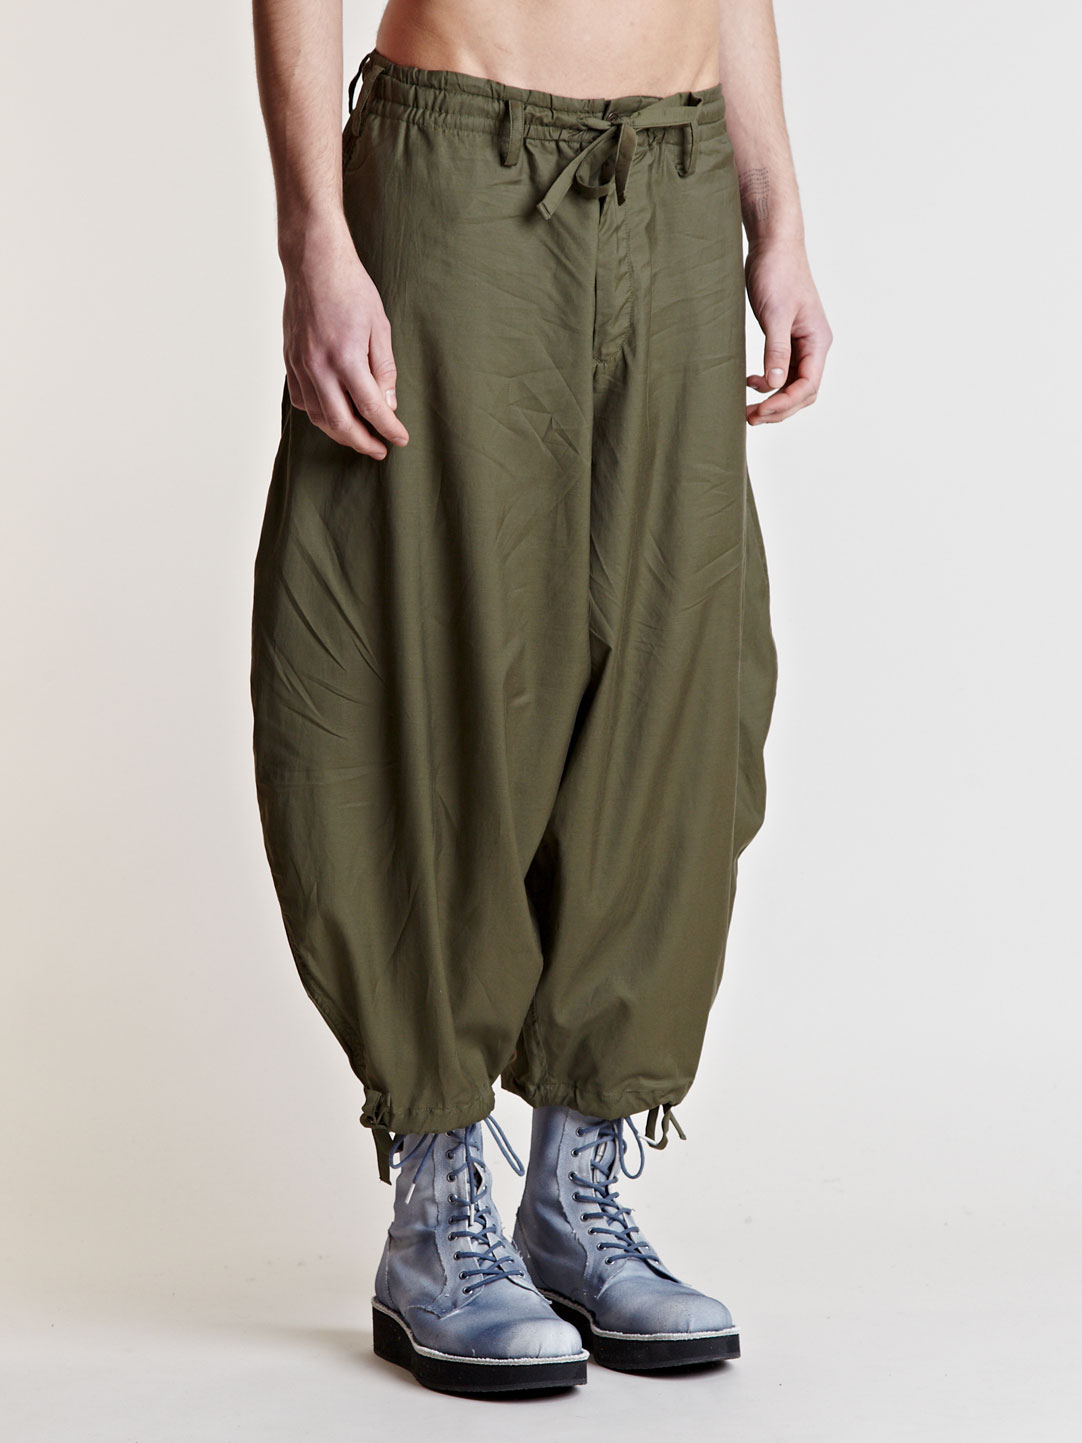 Lyst - Yohji Yamamoto Round Side Twill Pants in Green